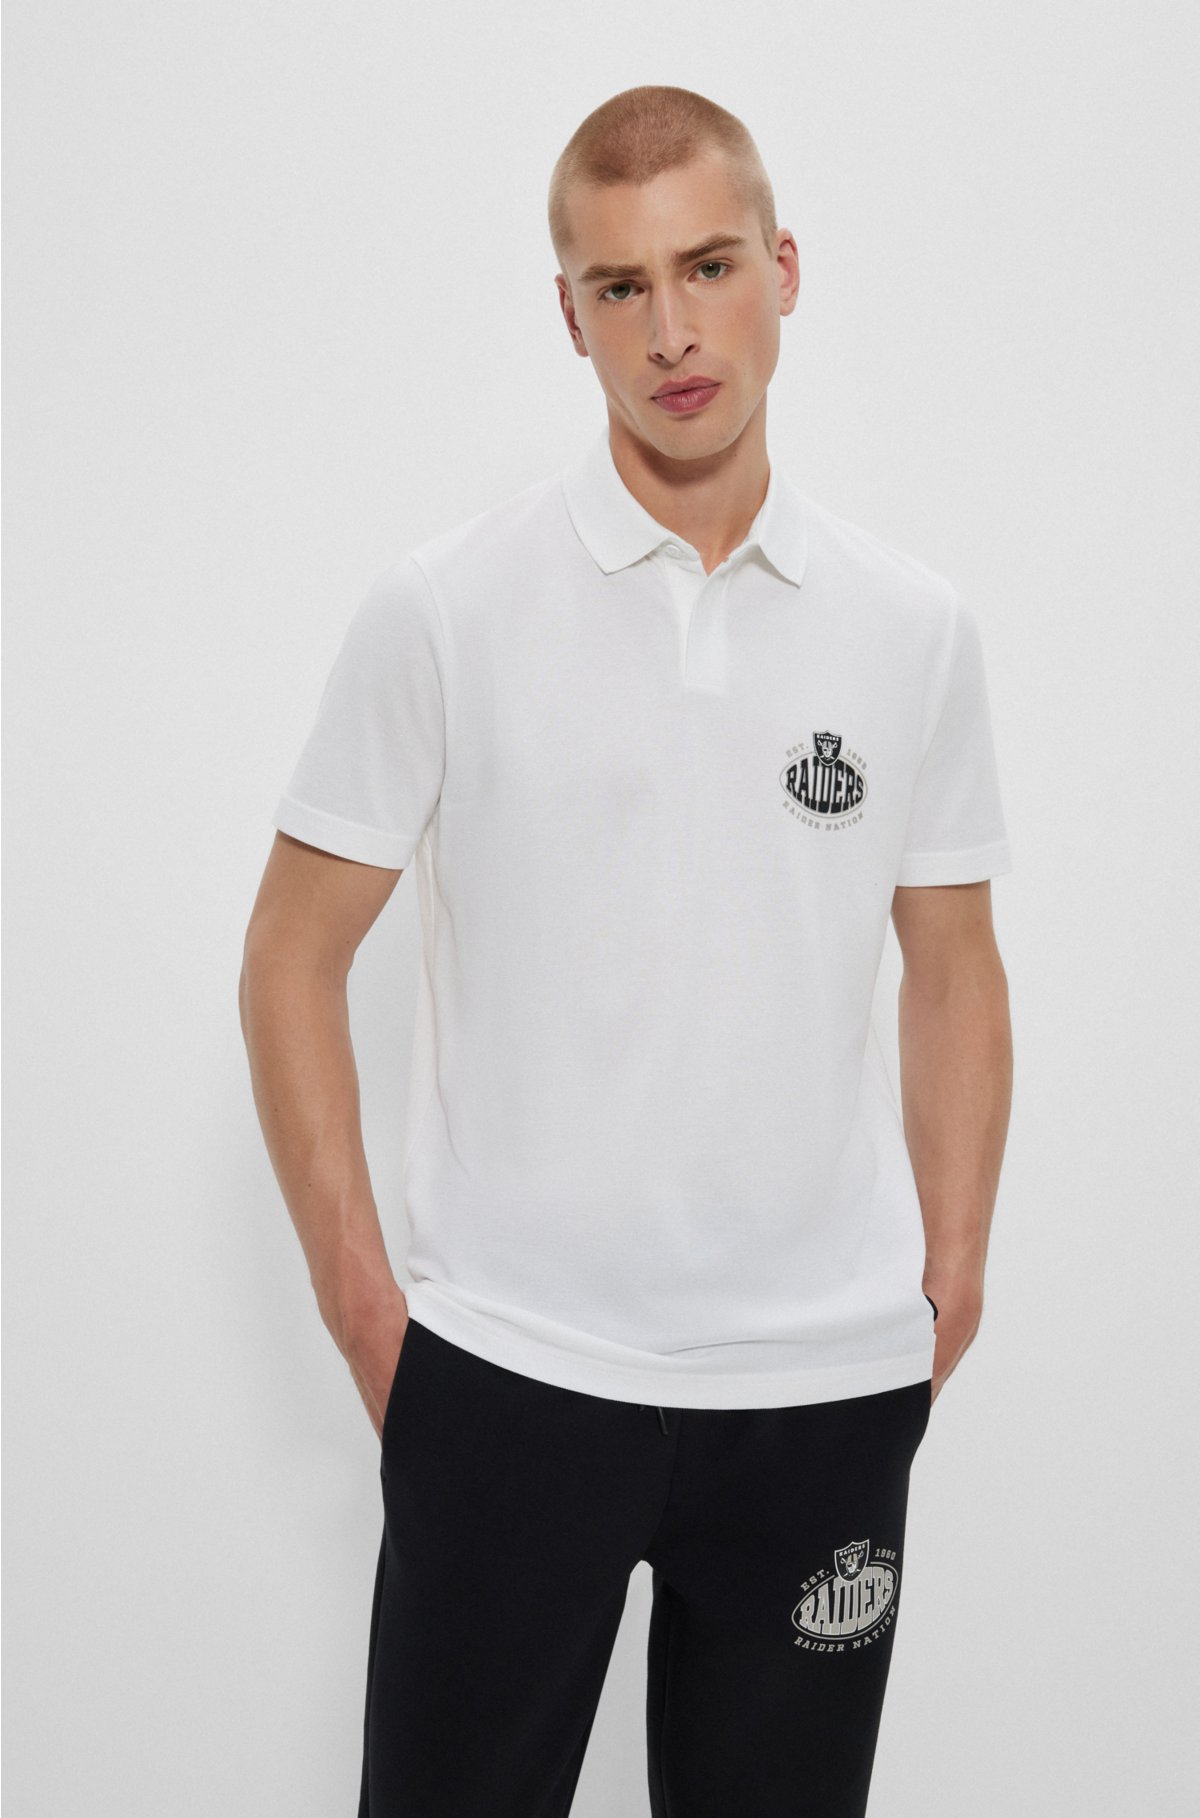 BOSS x NFL cotton-piqué polo shirt with collaborative branding, Raiders